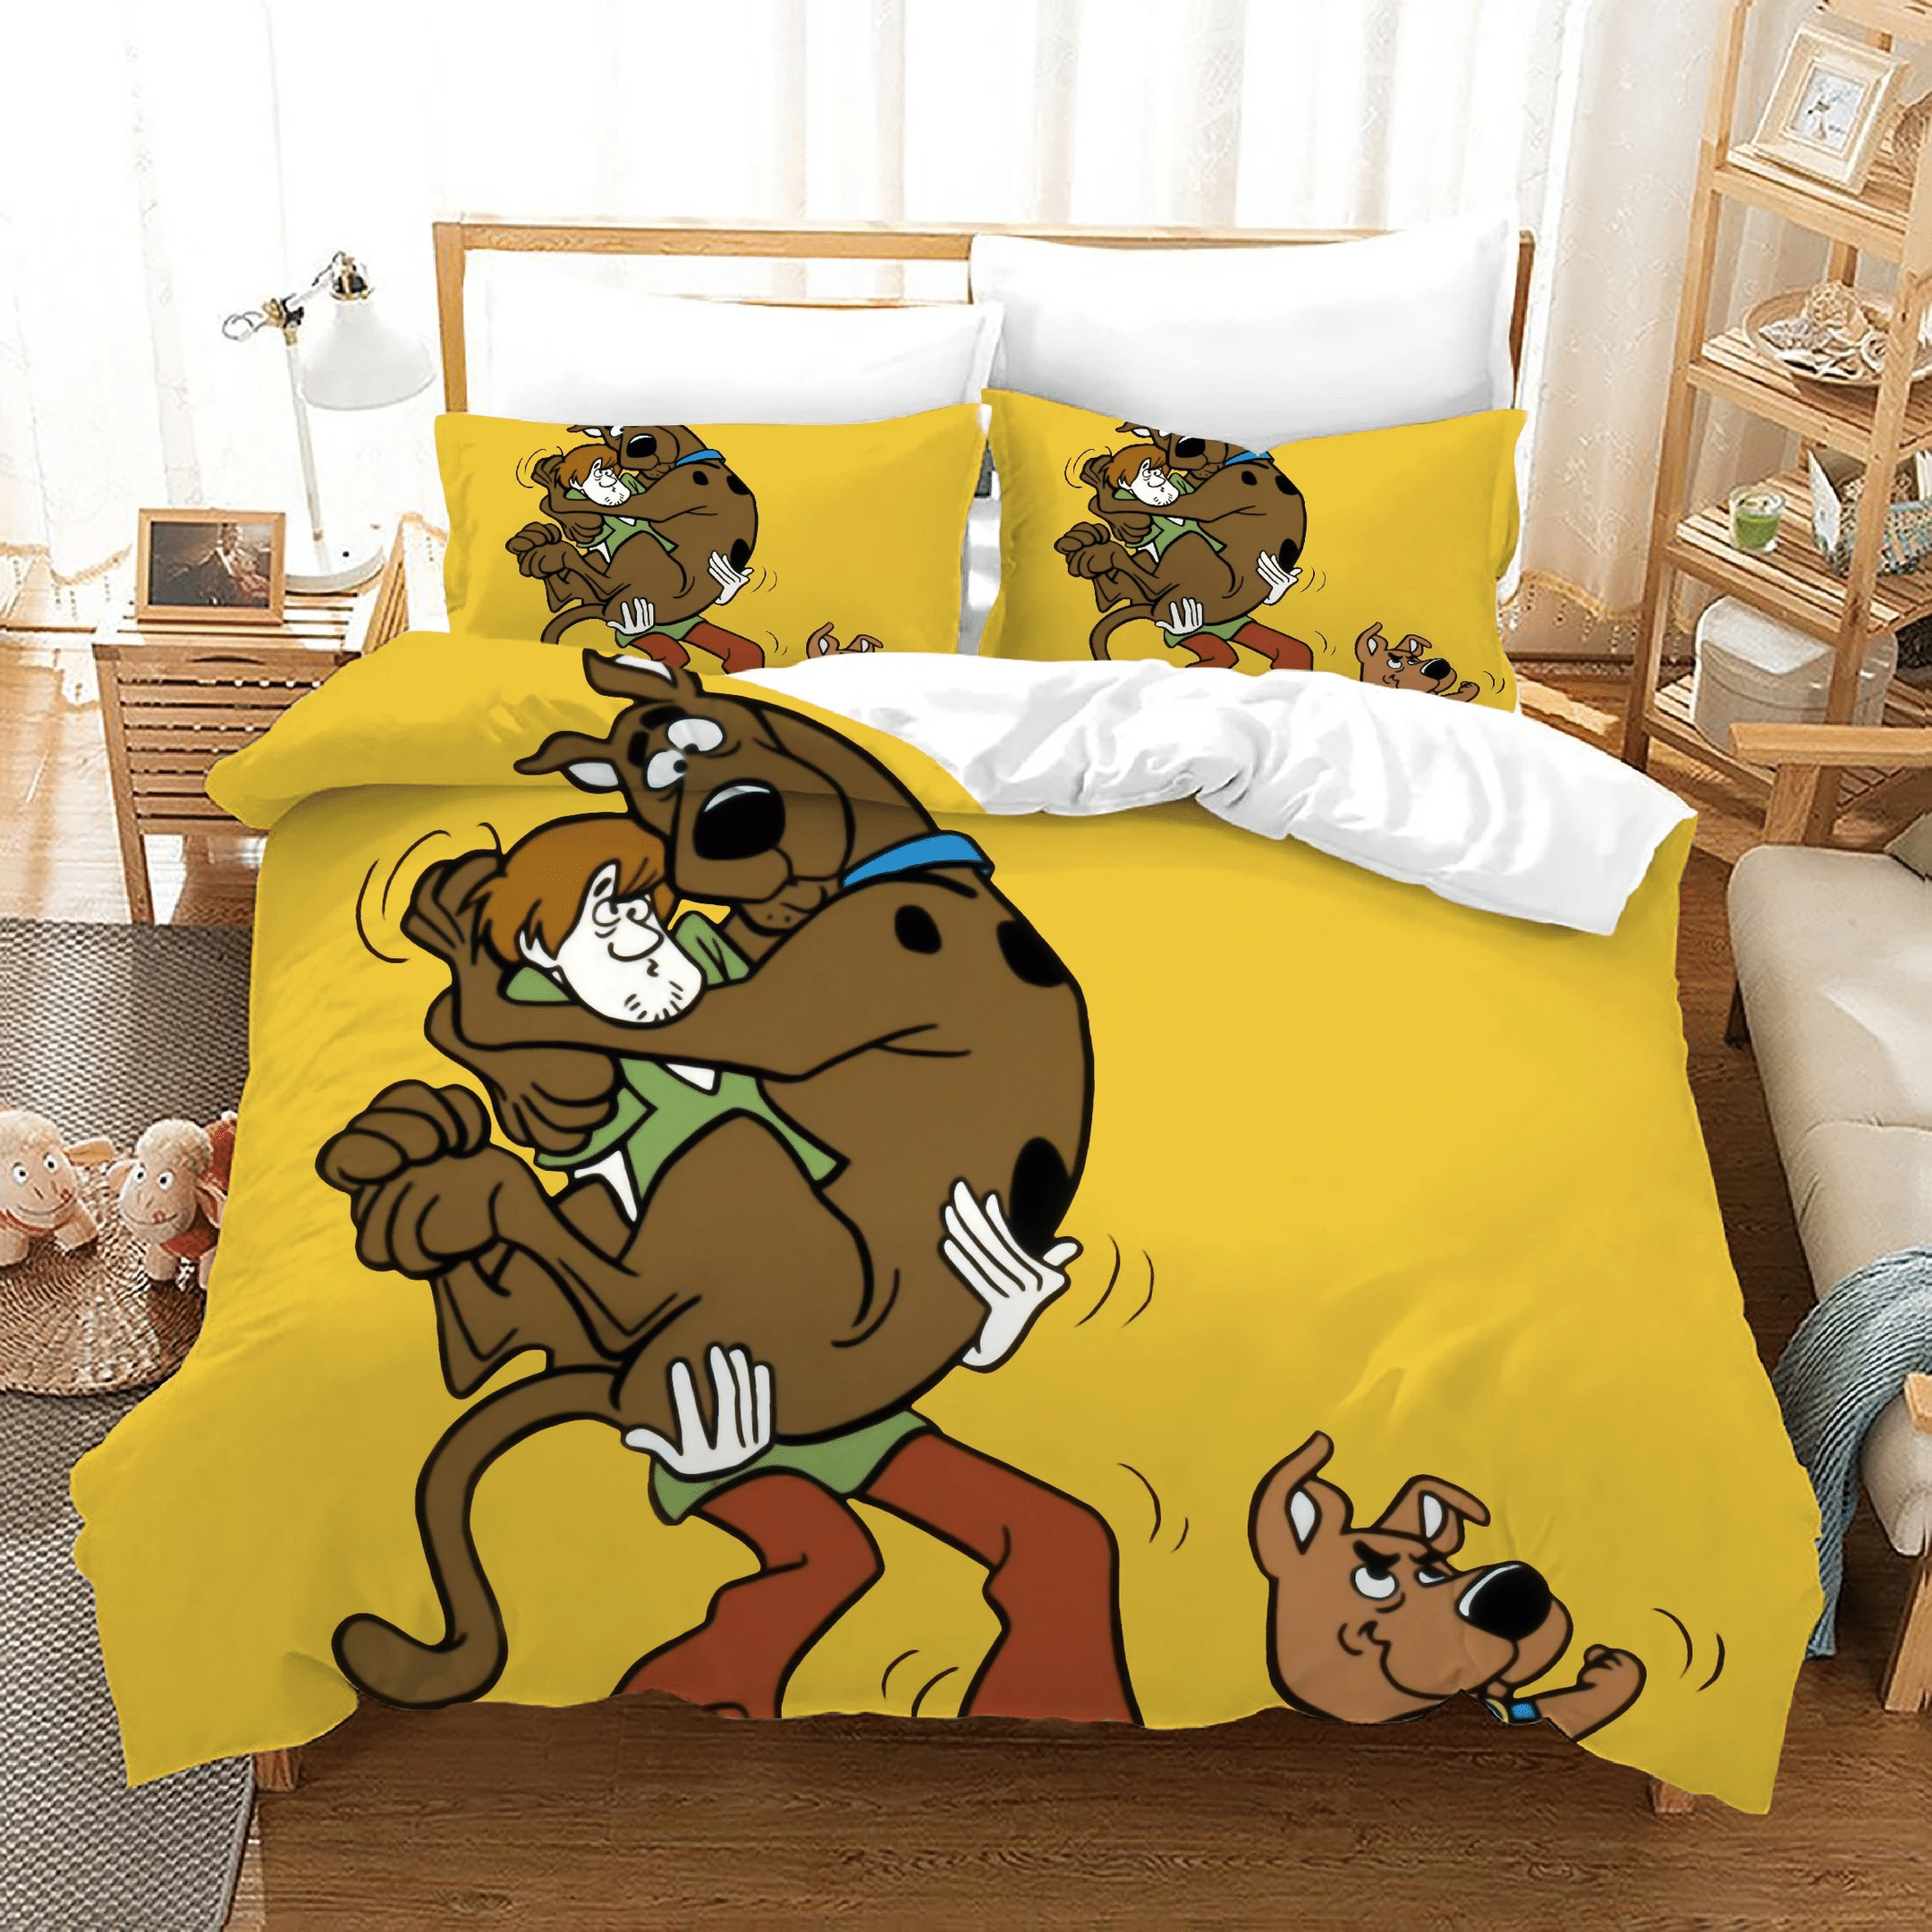 Scooby Doo 6 Duvet Cover Pillowcase Bedding Sets Home Bedroom